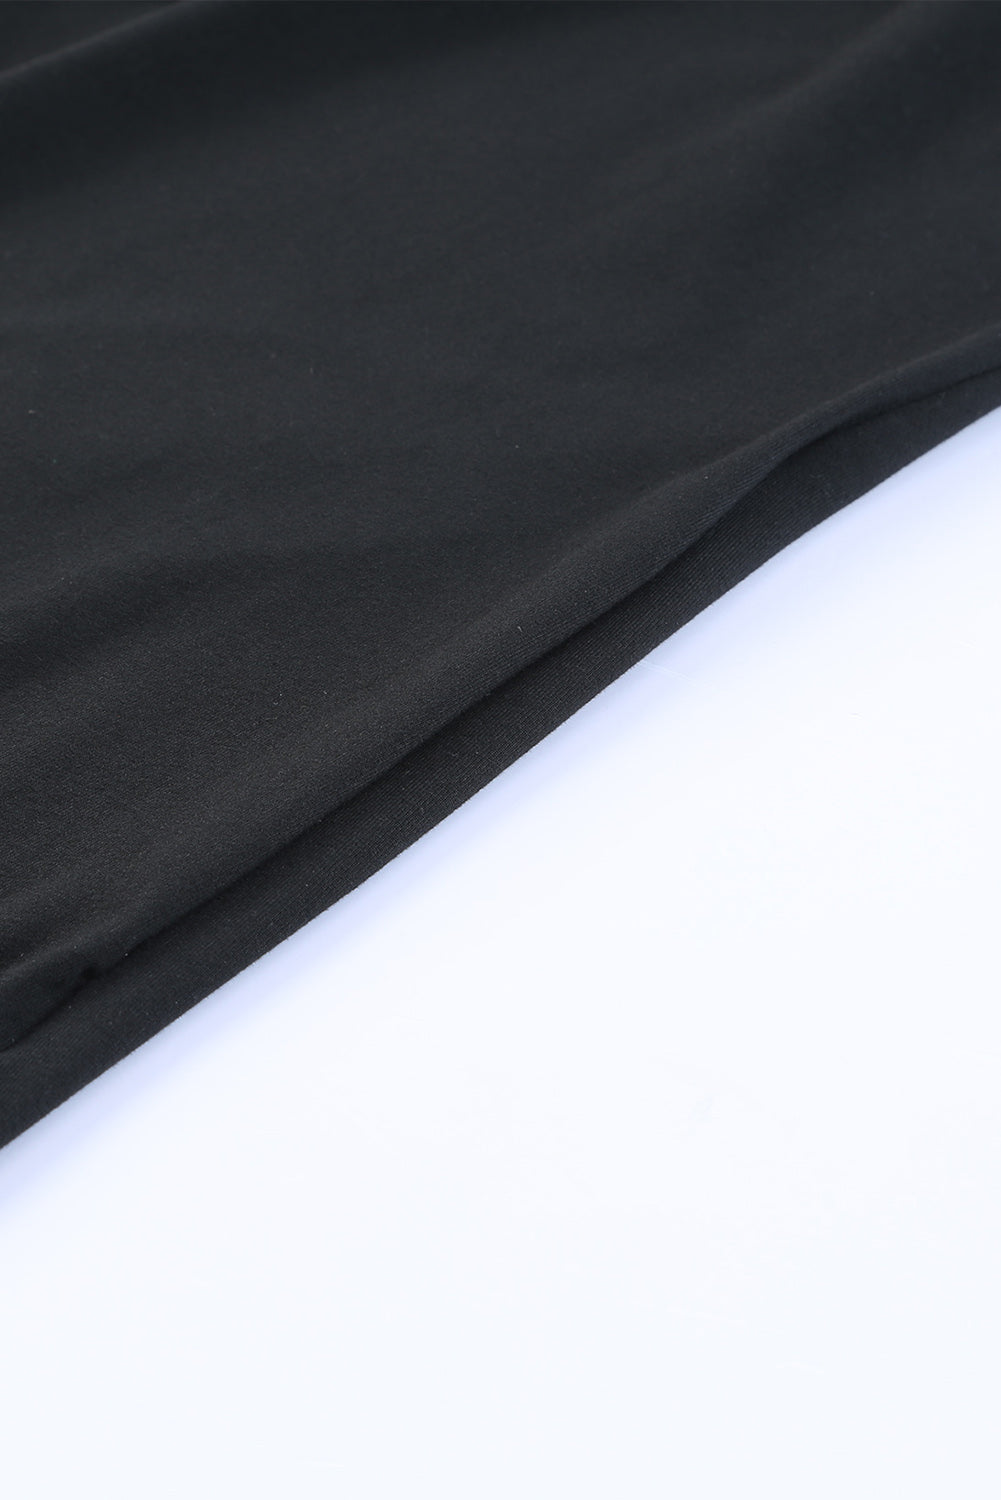 Black Contrast Solid Leopard Short Sleeve T-shirt Dress with Slits